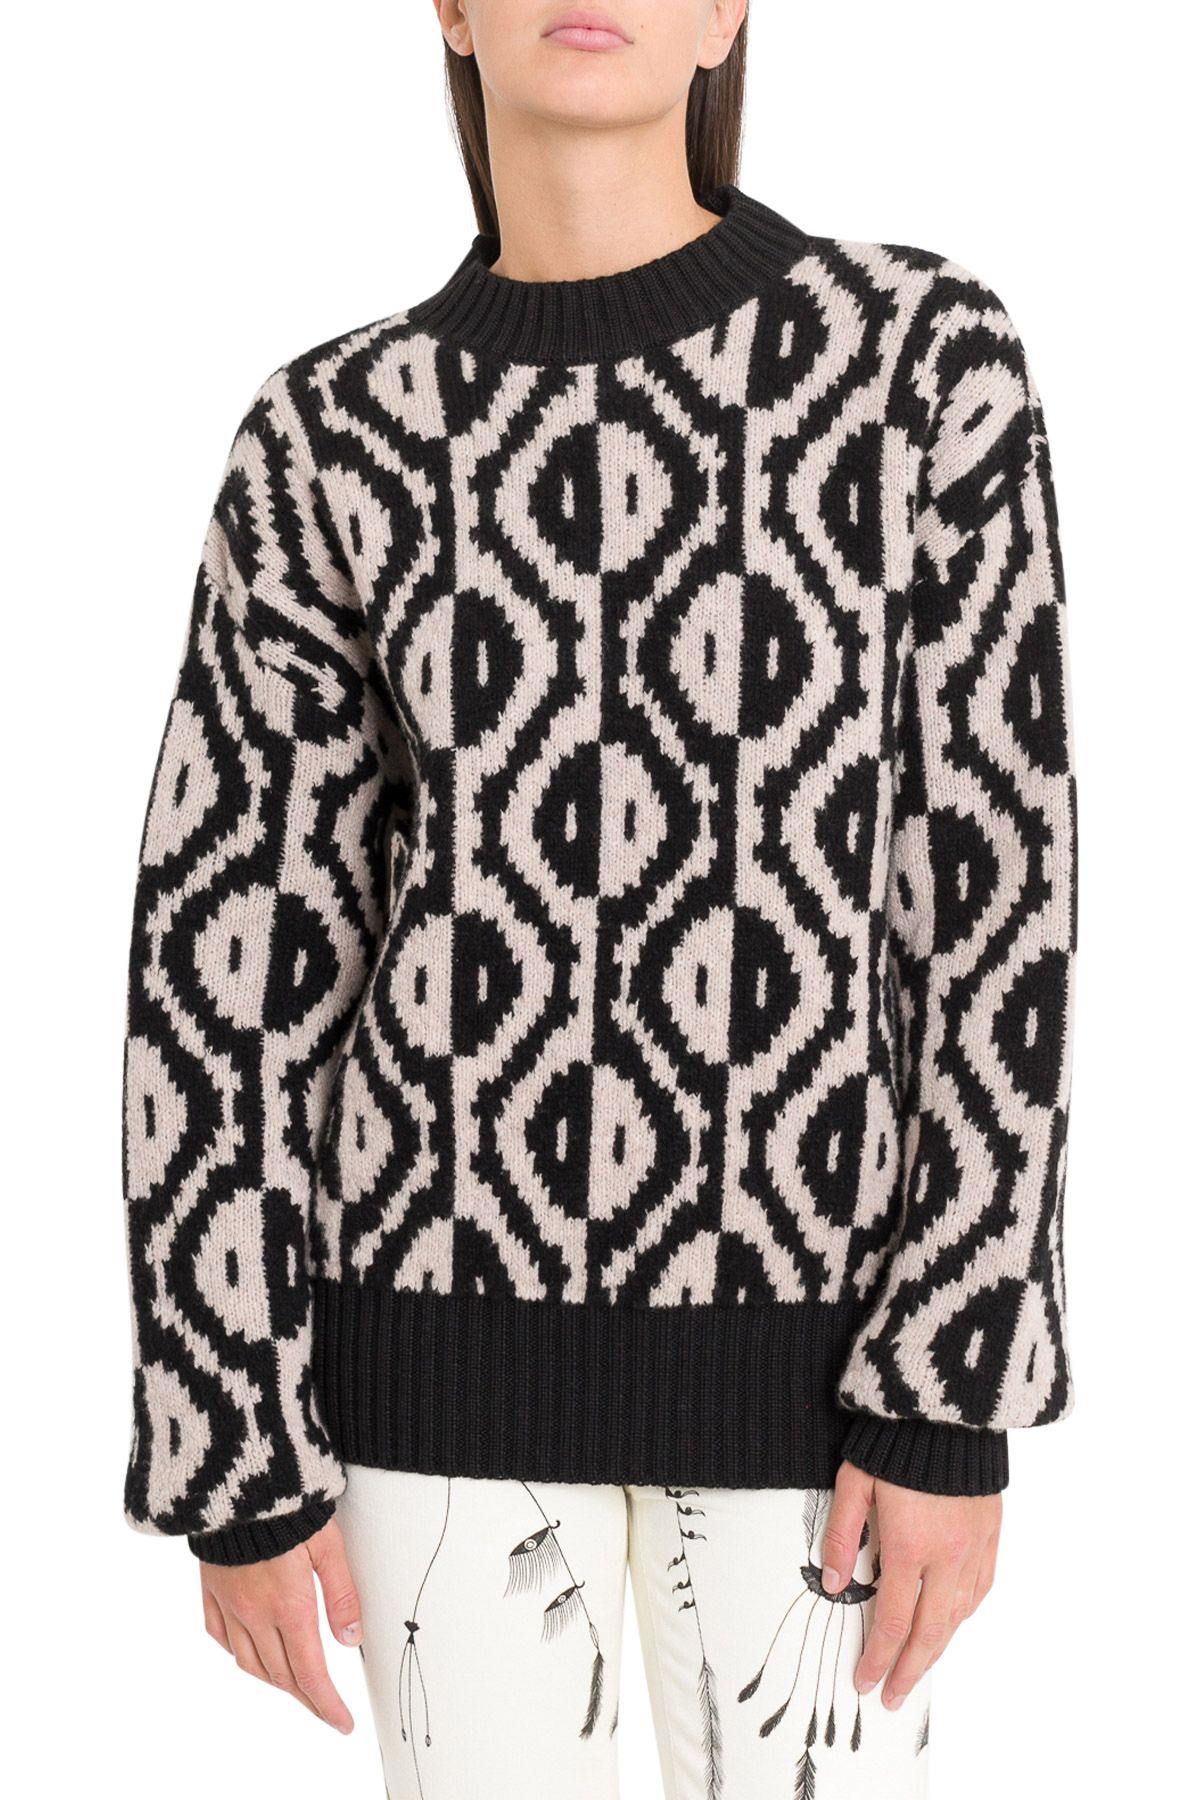 Dries Van Noten Wool And Cashmere-blend Sweater In Nero/bianco | ModeSens